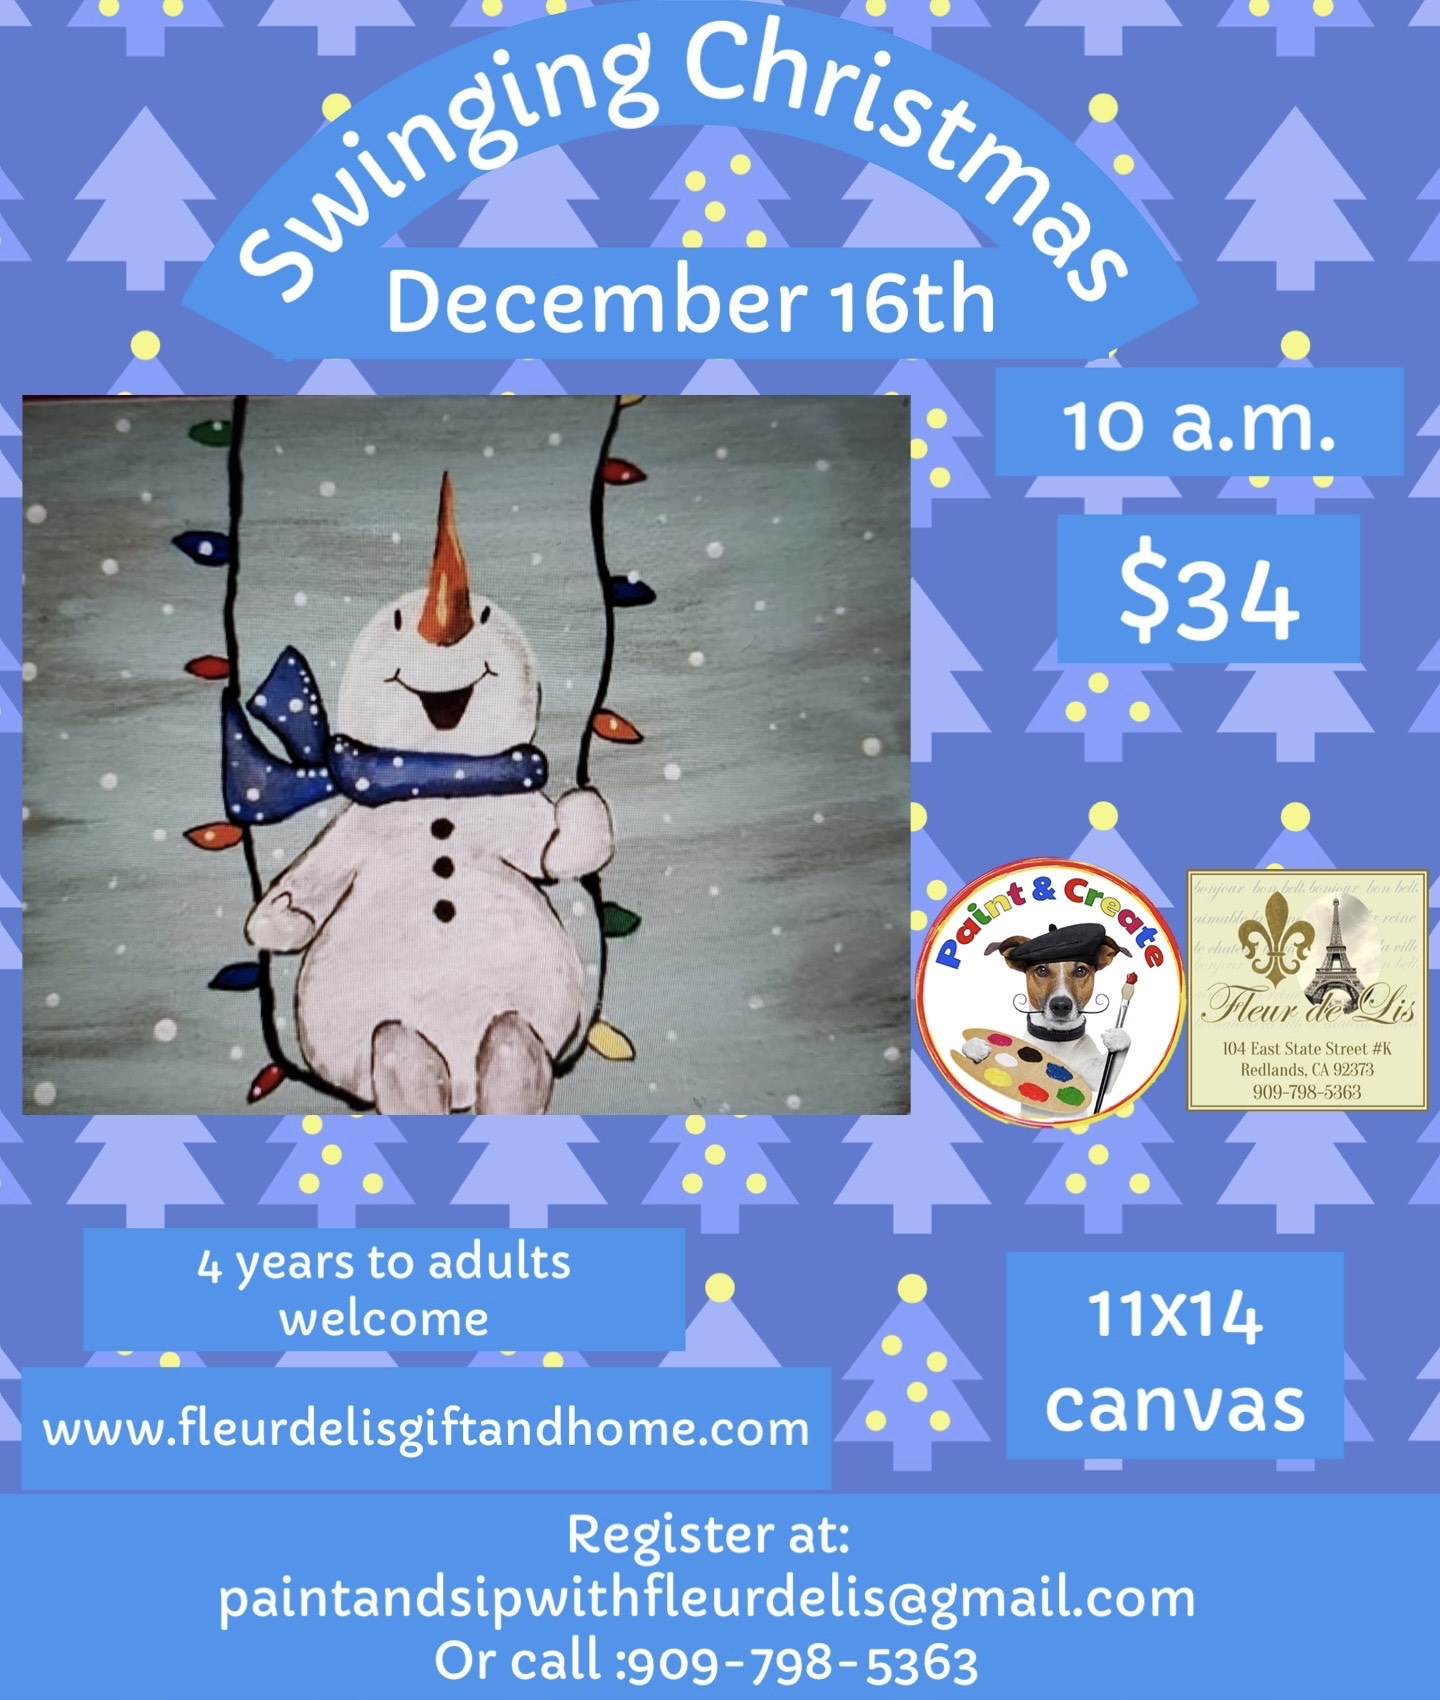 Swinging Snowman December 16th 10 a.m.